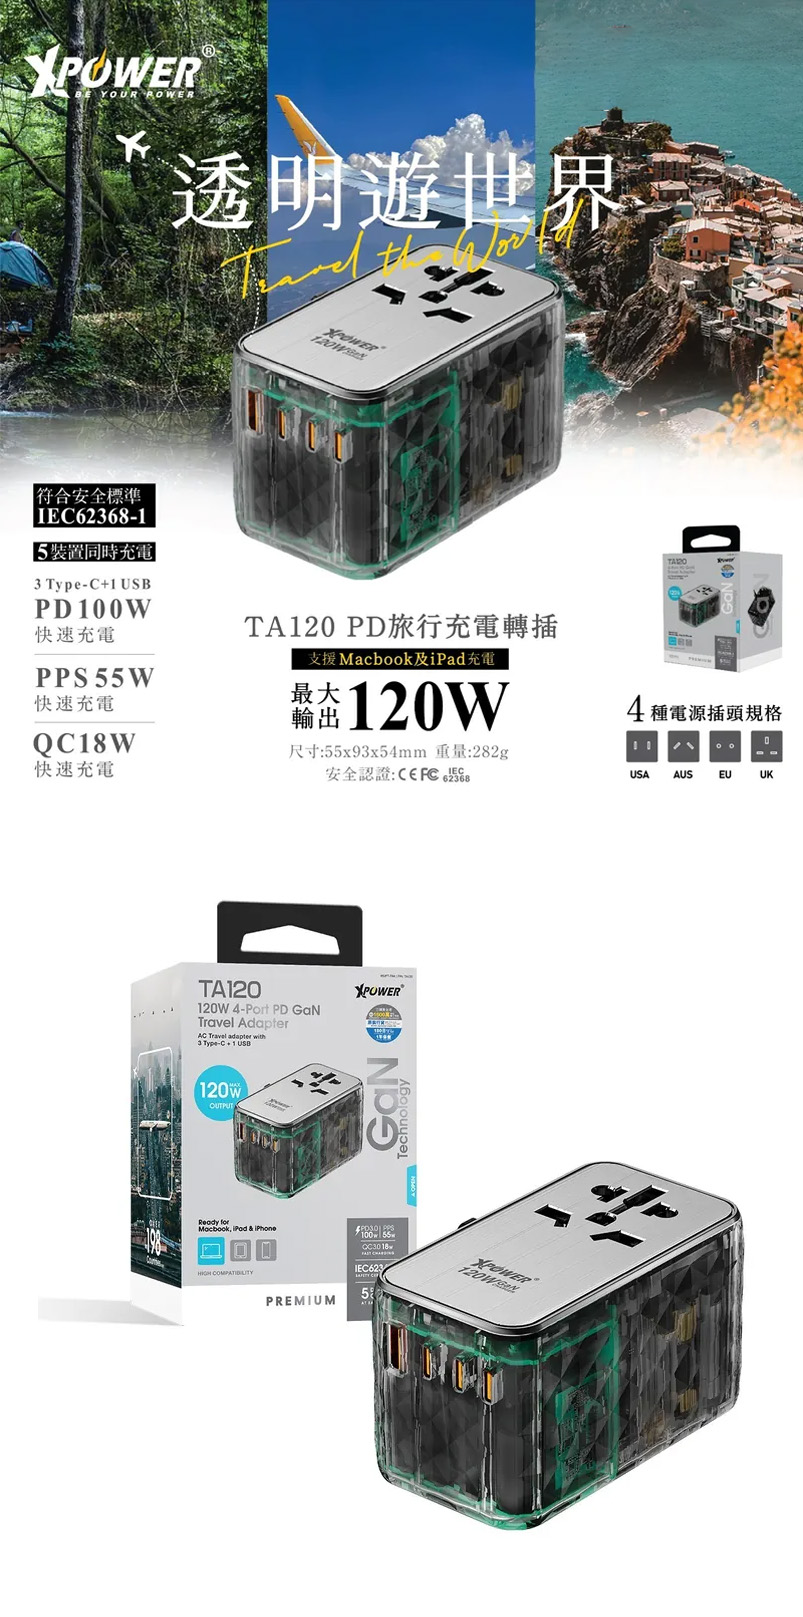 XPower TA120 5 Output 120W GaN PD Travel Adapter